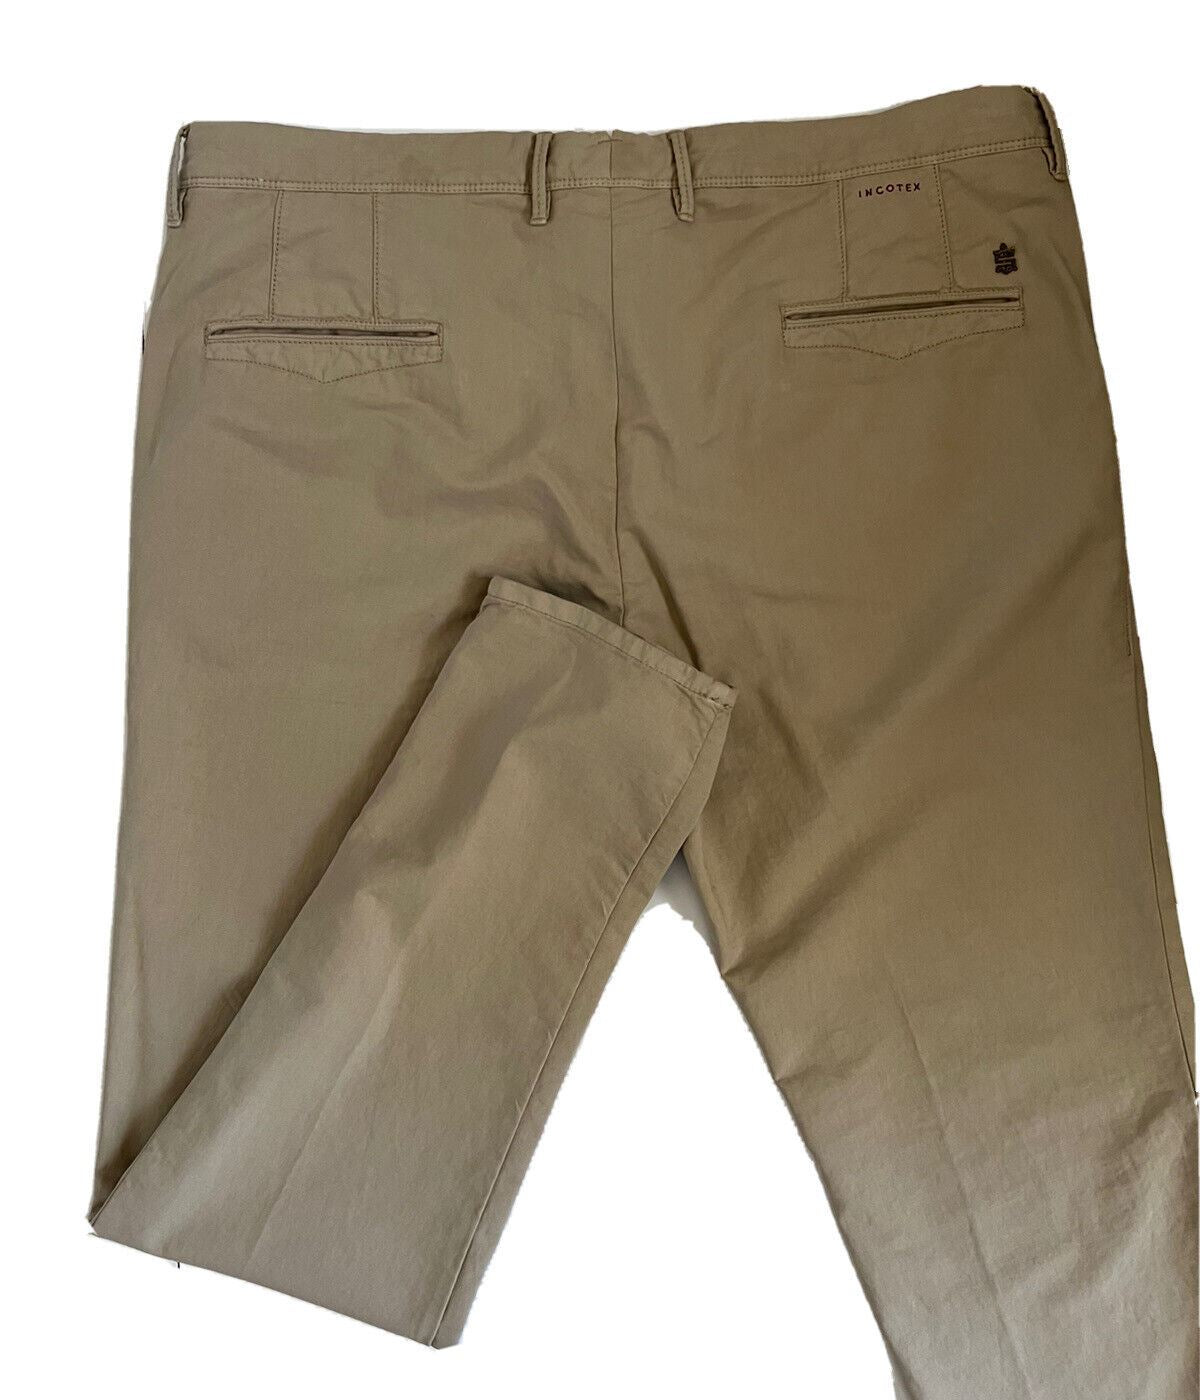 NWT $495 Incotex Men's Slim Fit Pants Beige Size 42 US